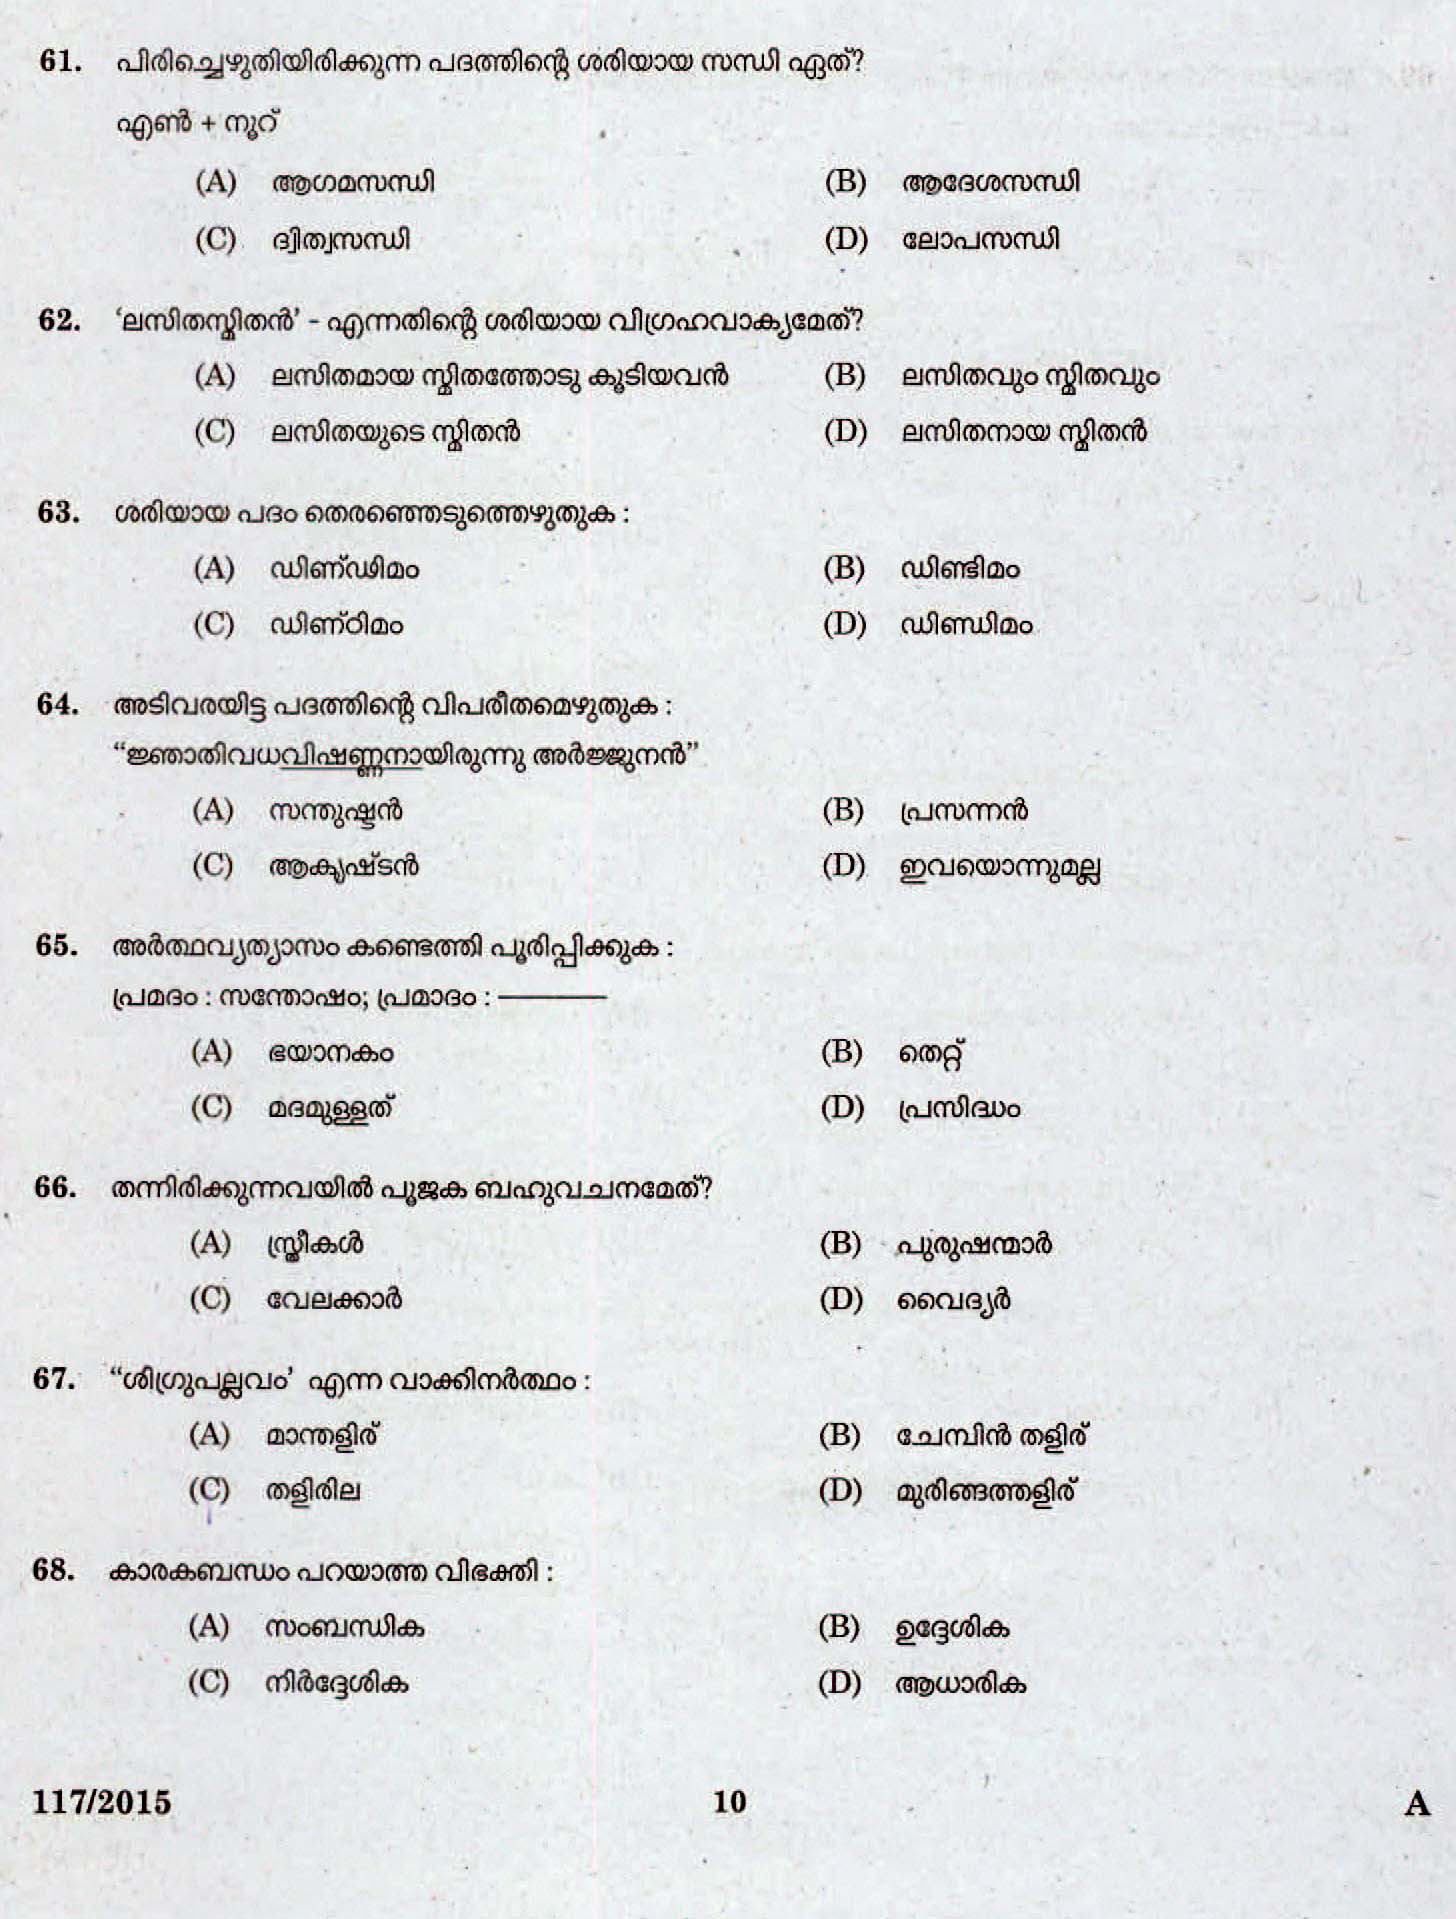 LD Clerk Various Kasaragod Question Paper Malayalam 2015 Paper Code 1172015 8